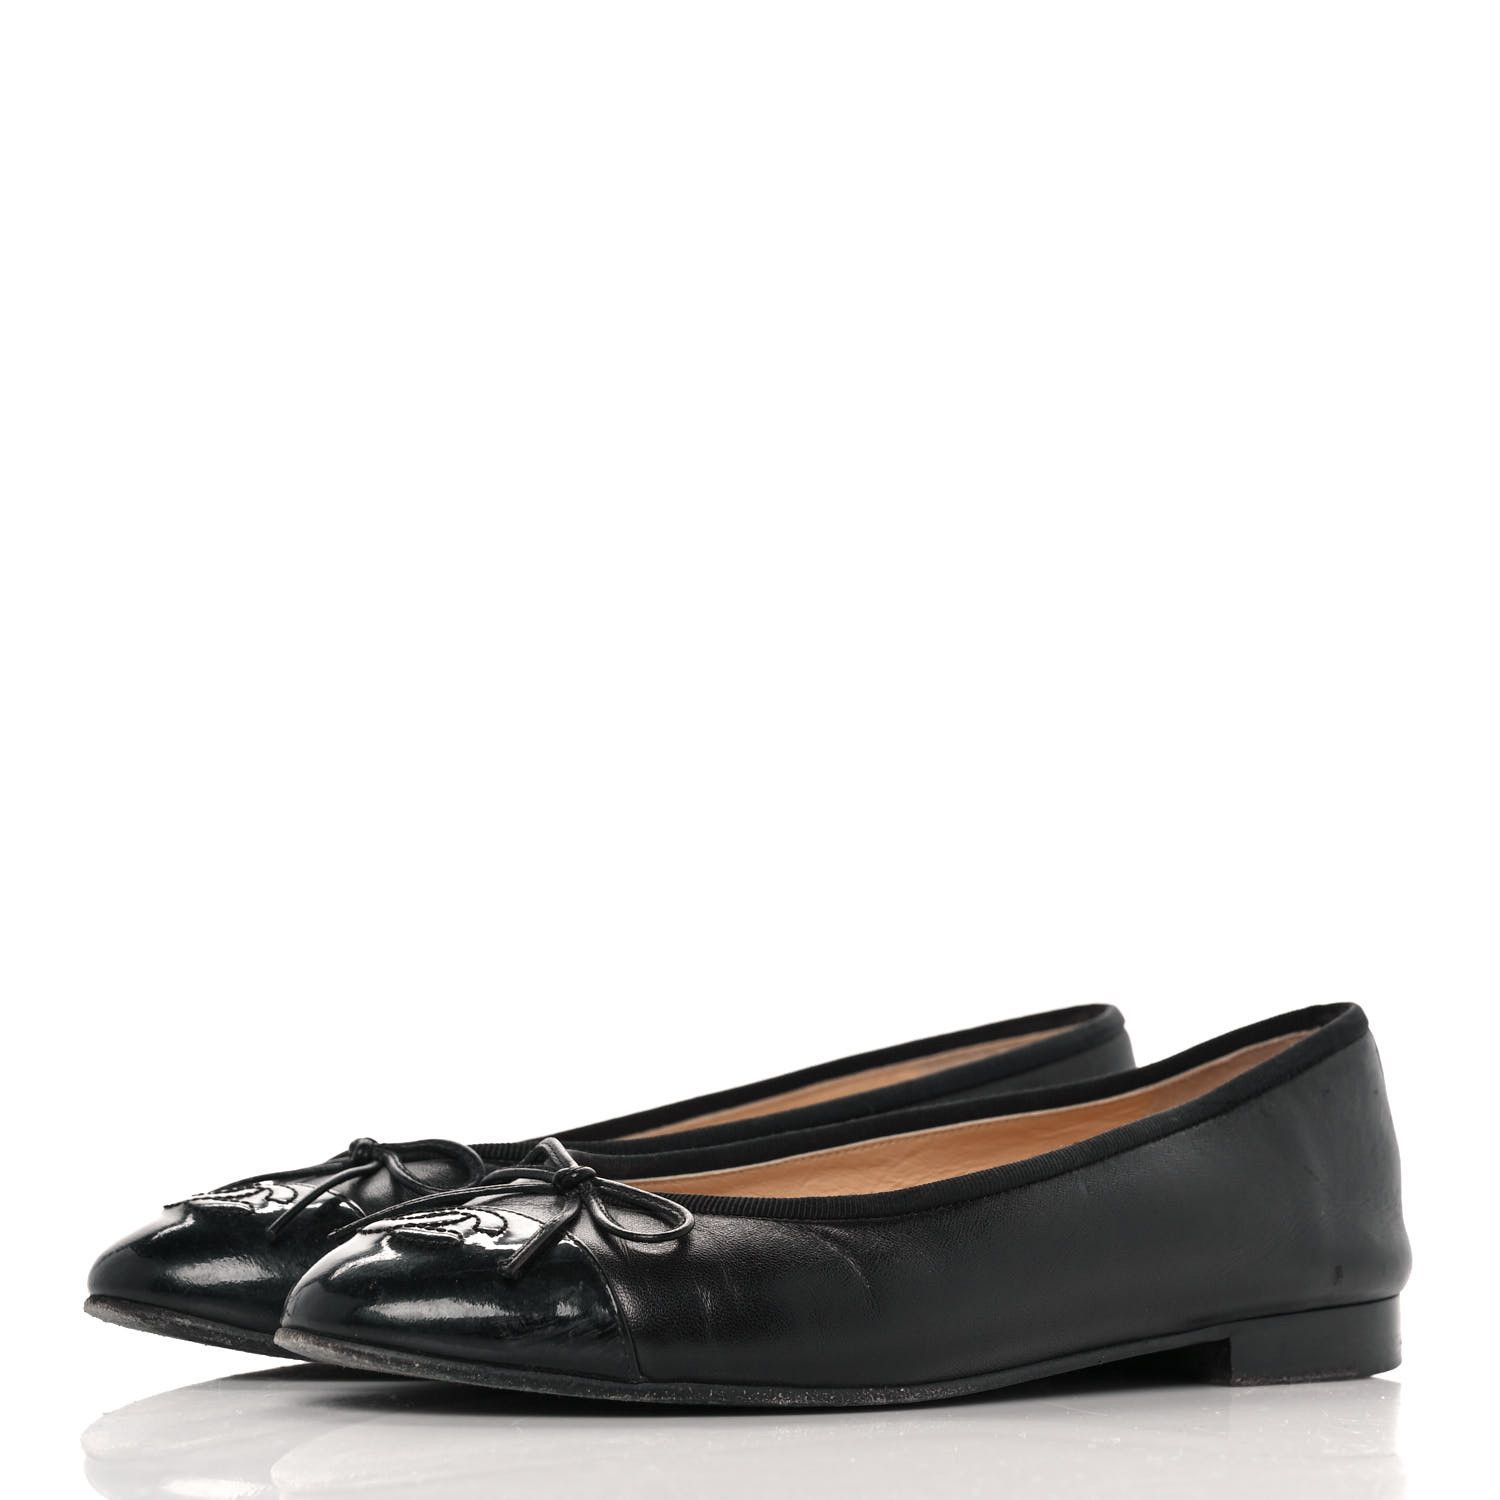 CHANEL Lambskin Patent Cap Toe Ballerina Flats 37 Black | FASHIONPHILE | Fashionphile